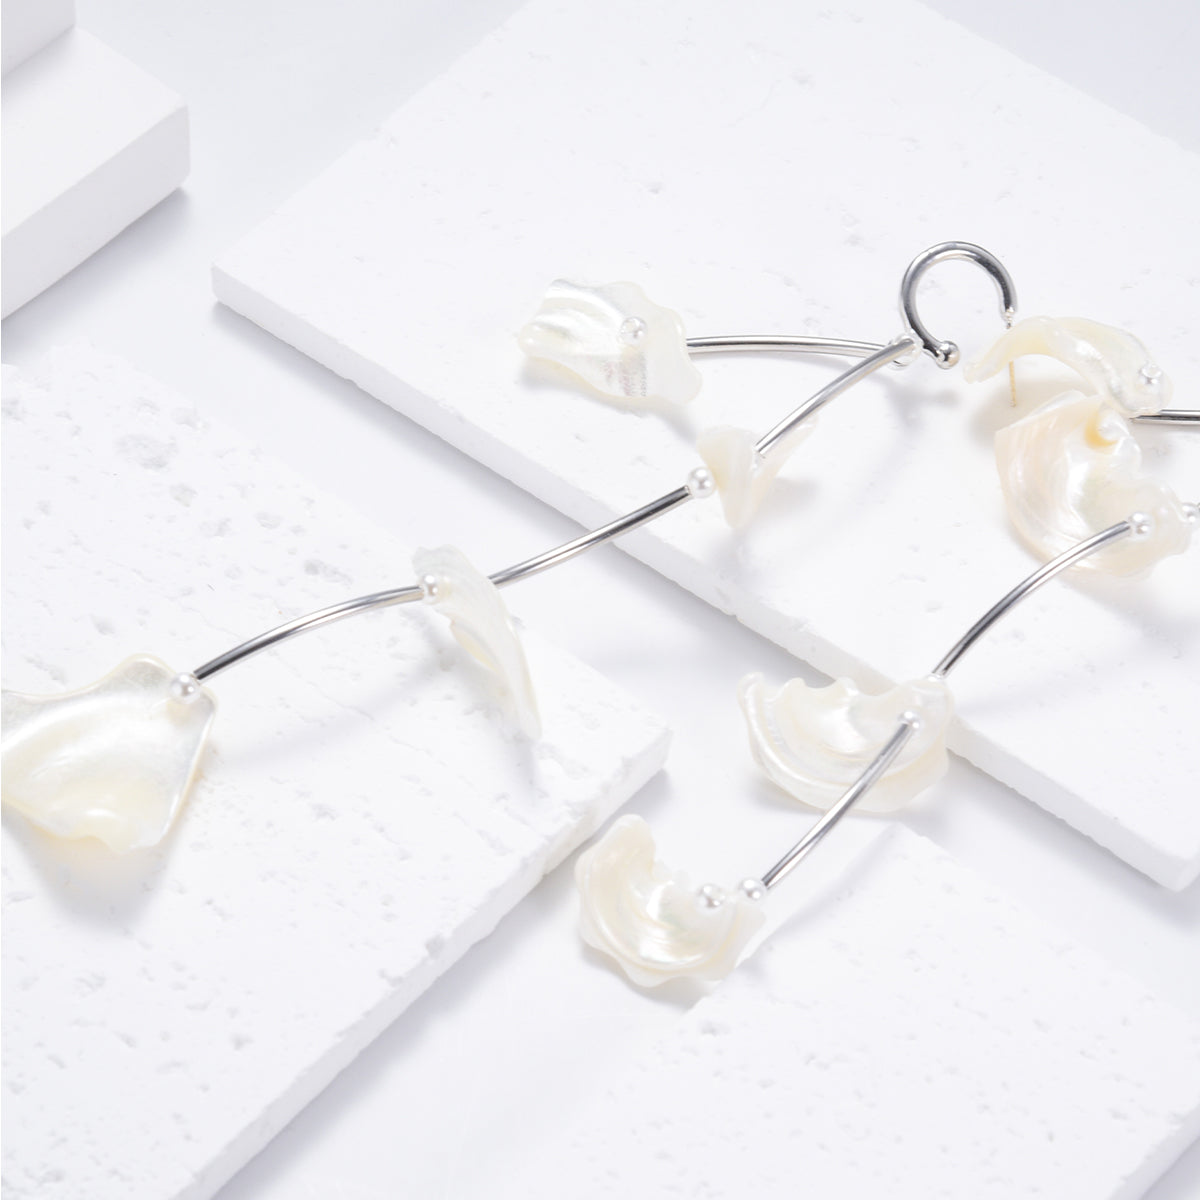 Lustrous silver sleek earrings featuring white shells